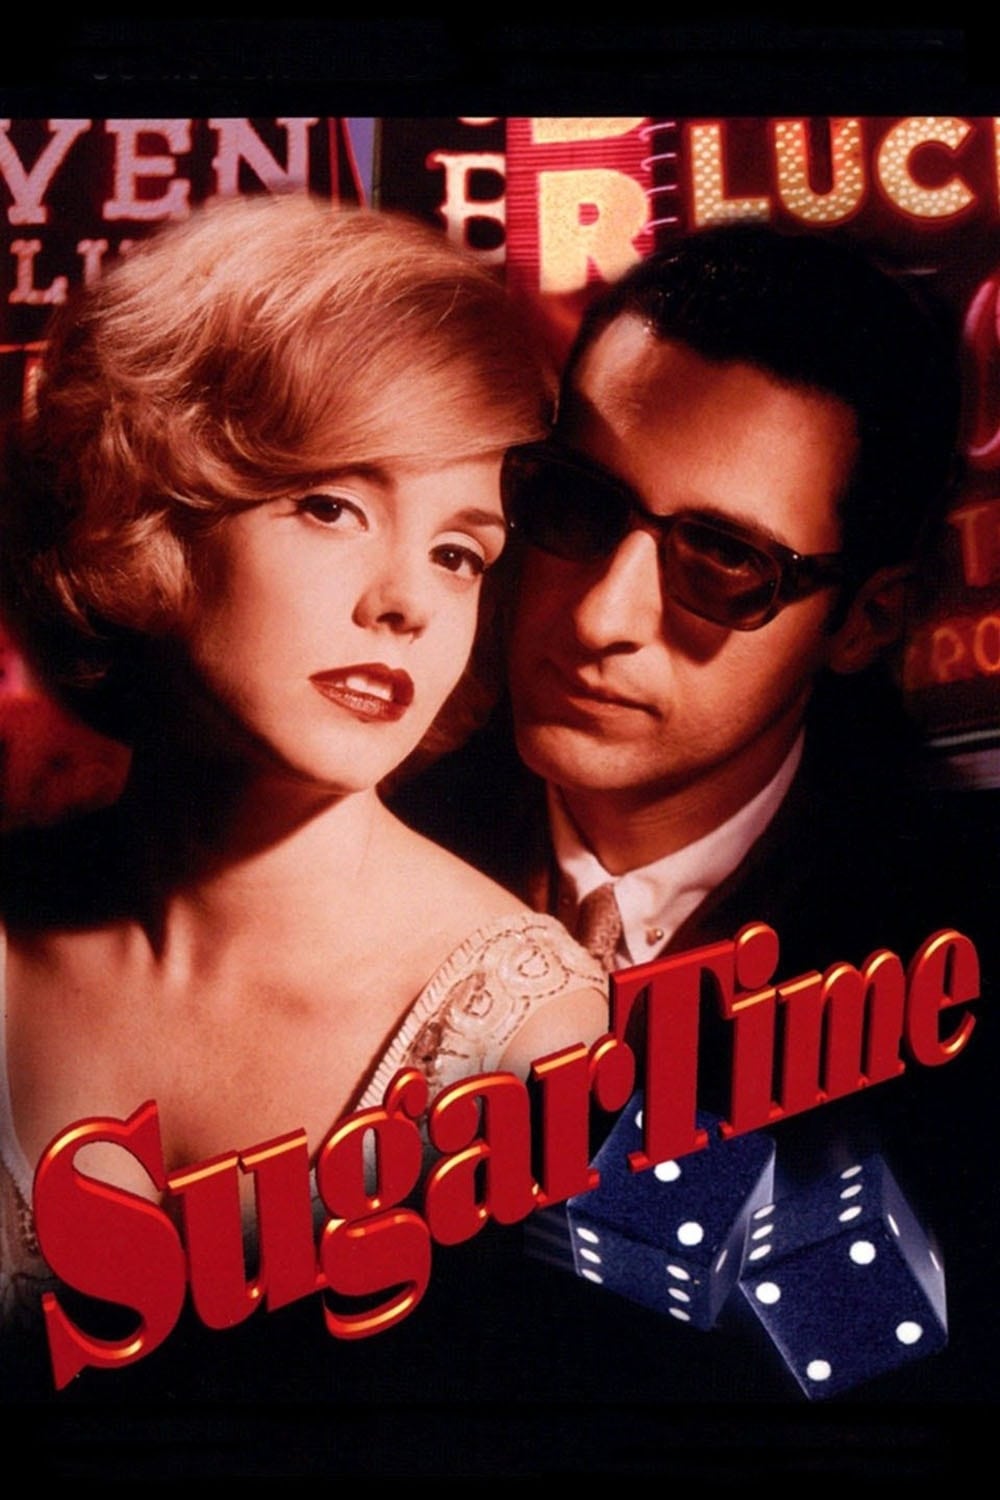 Sugartime (1995)